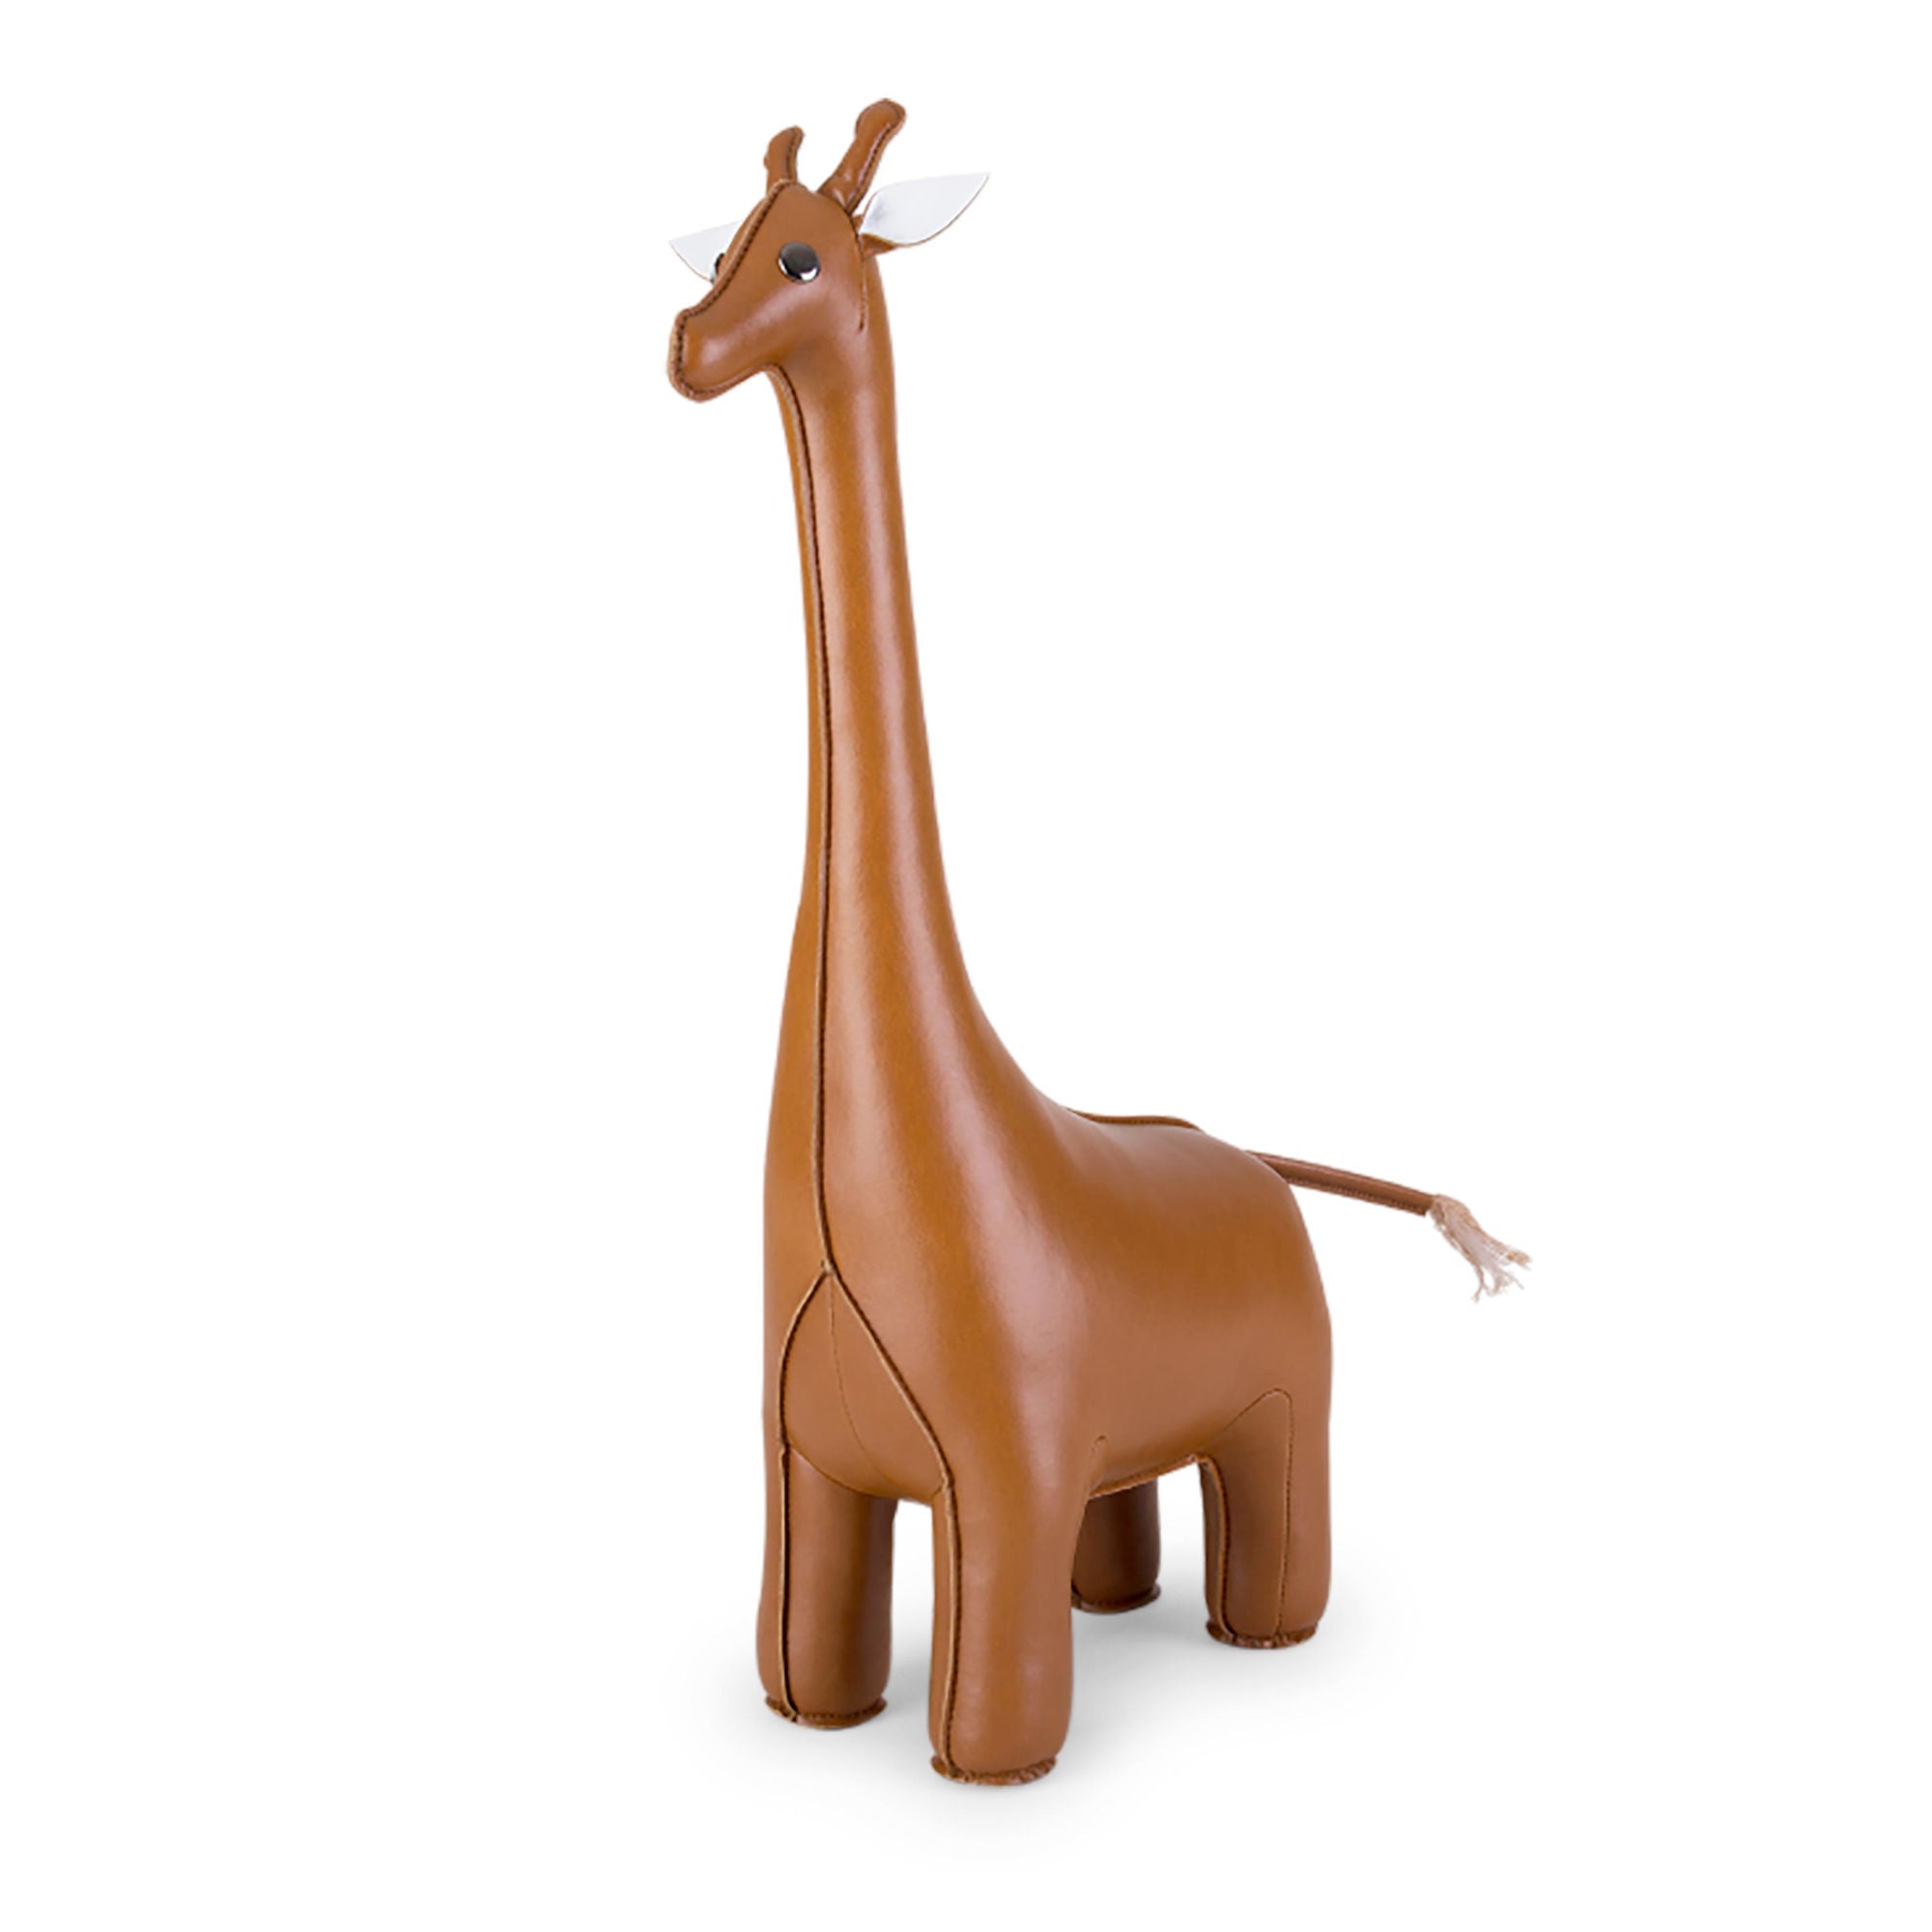 Zuny Doorstop Classic Giraffe, tan/white